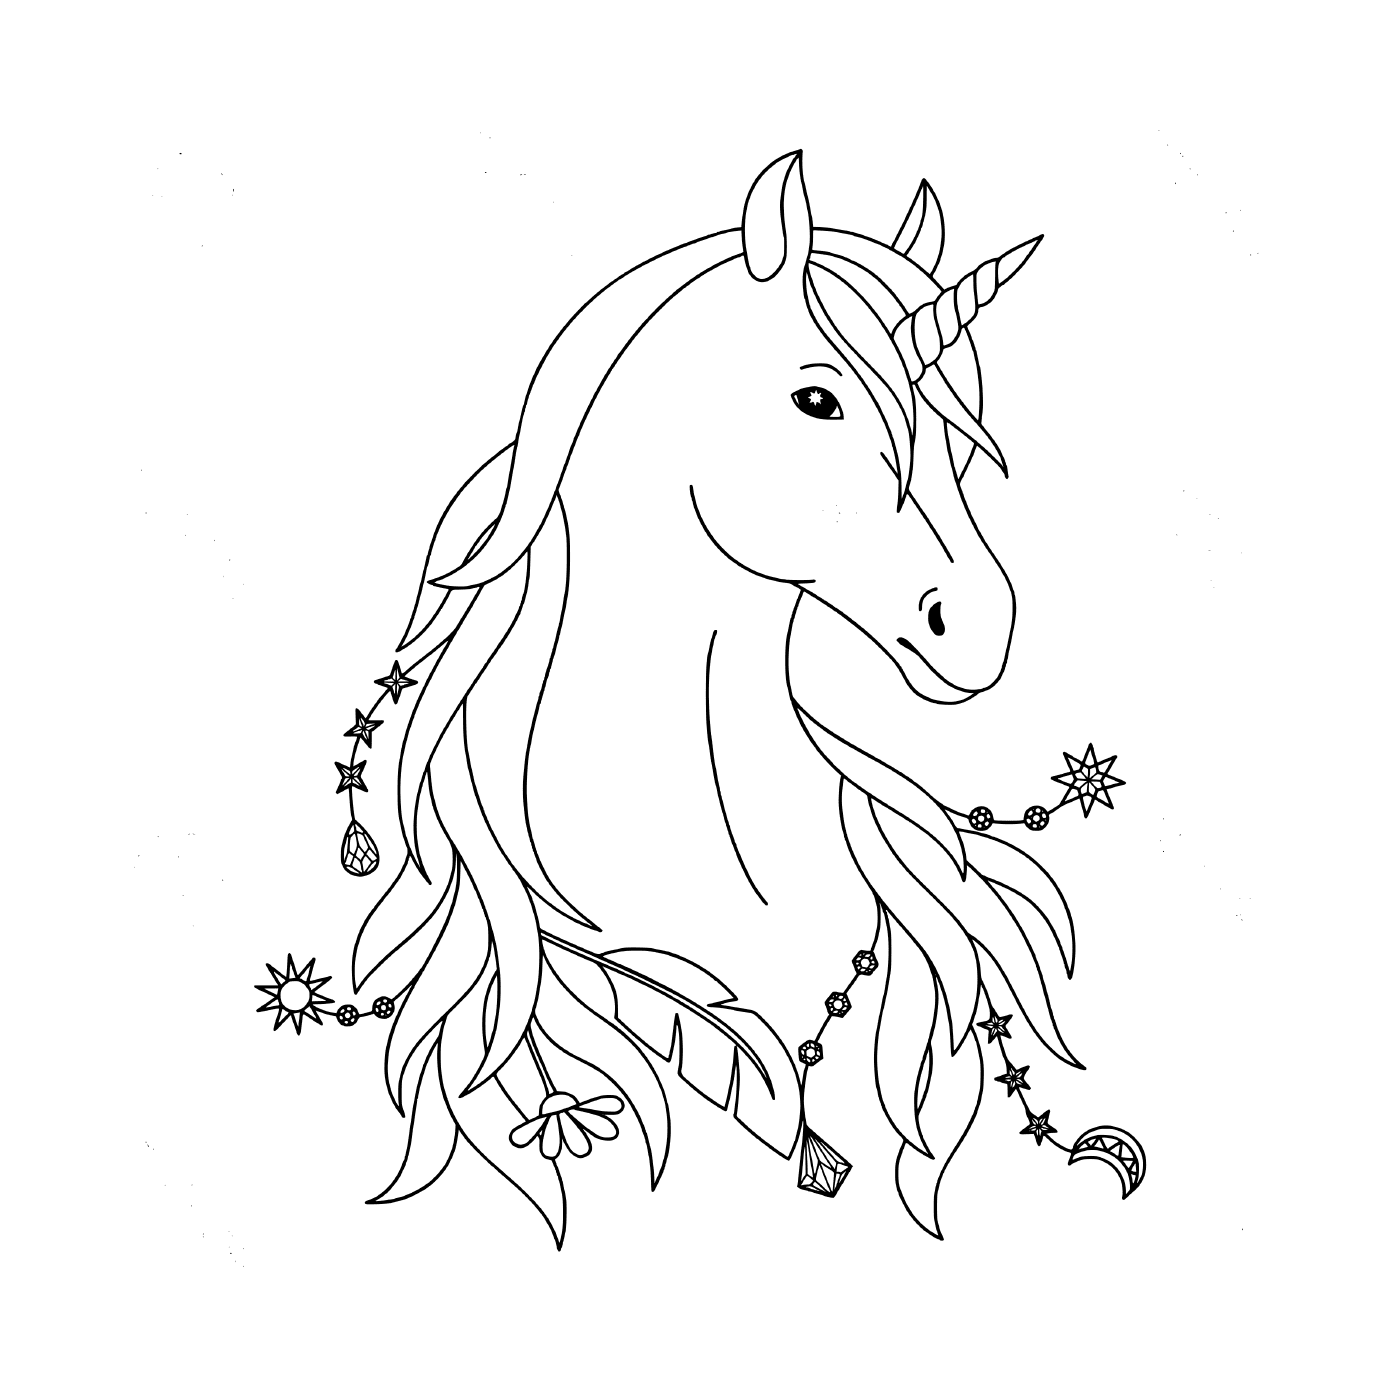  single unicorn in black and white 